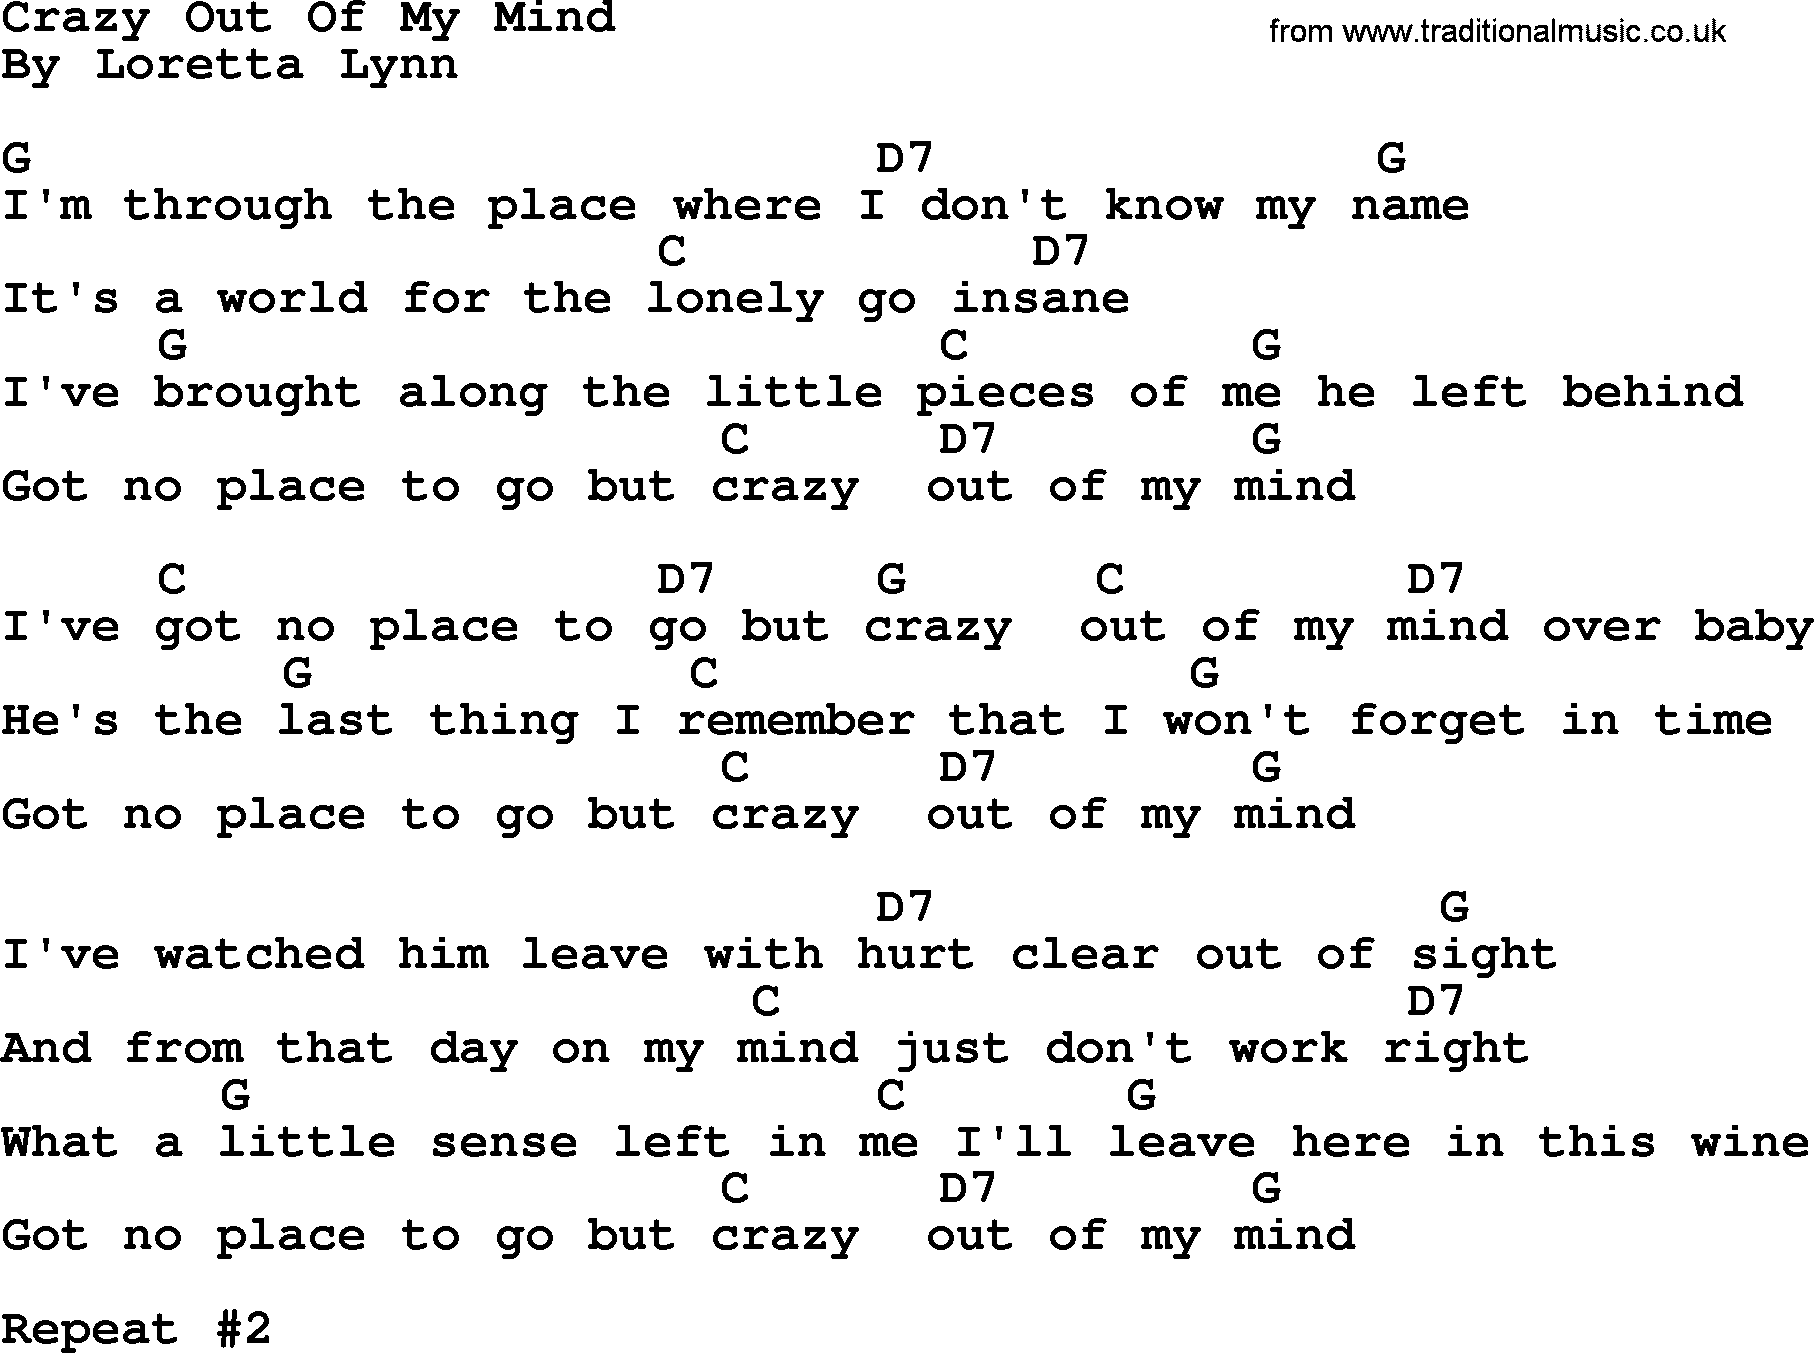 Loretta Lynn song: Crazy Out Of My Mind lyrics and chords